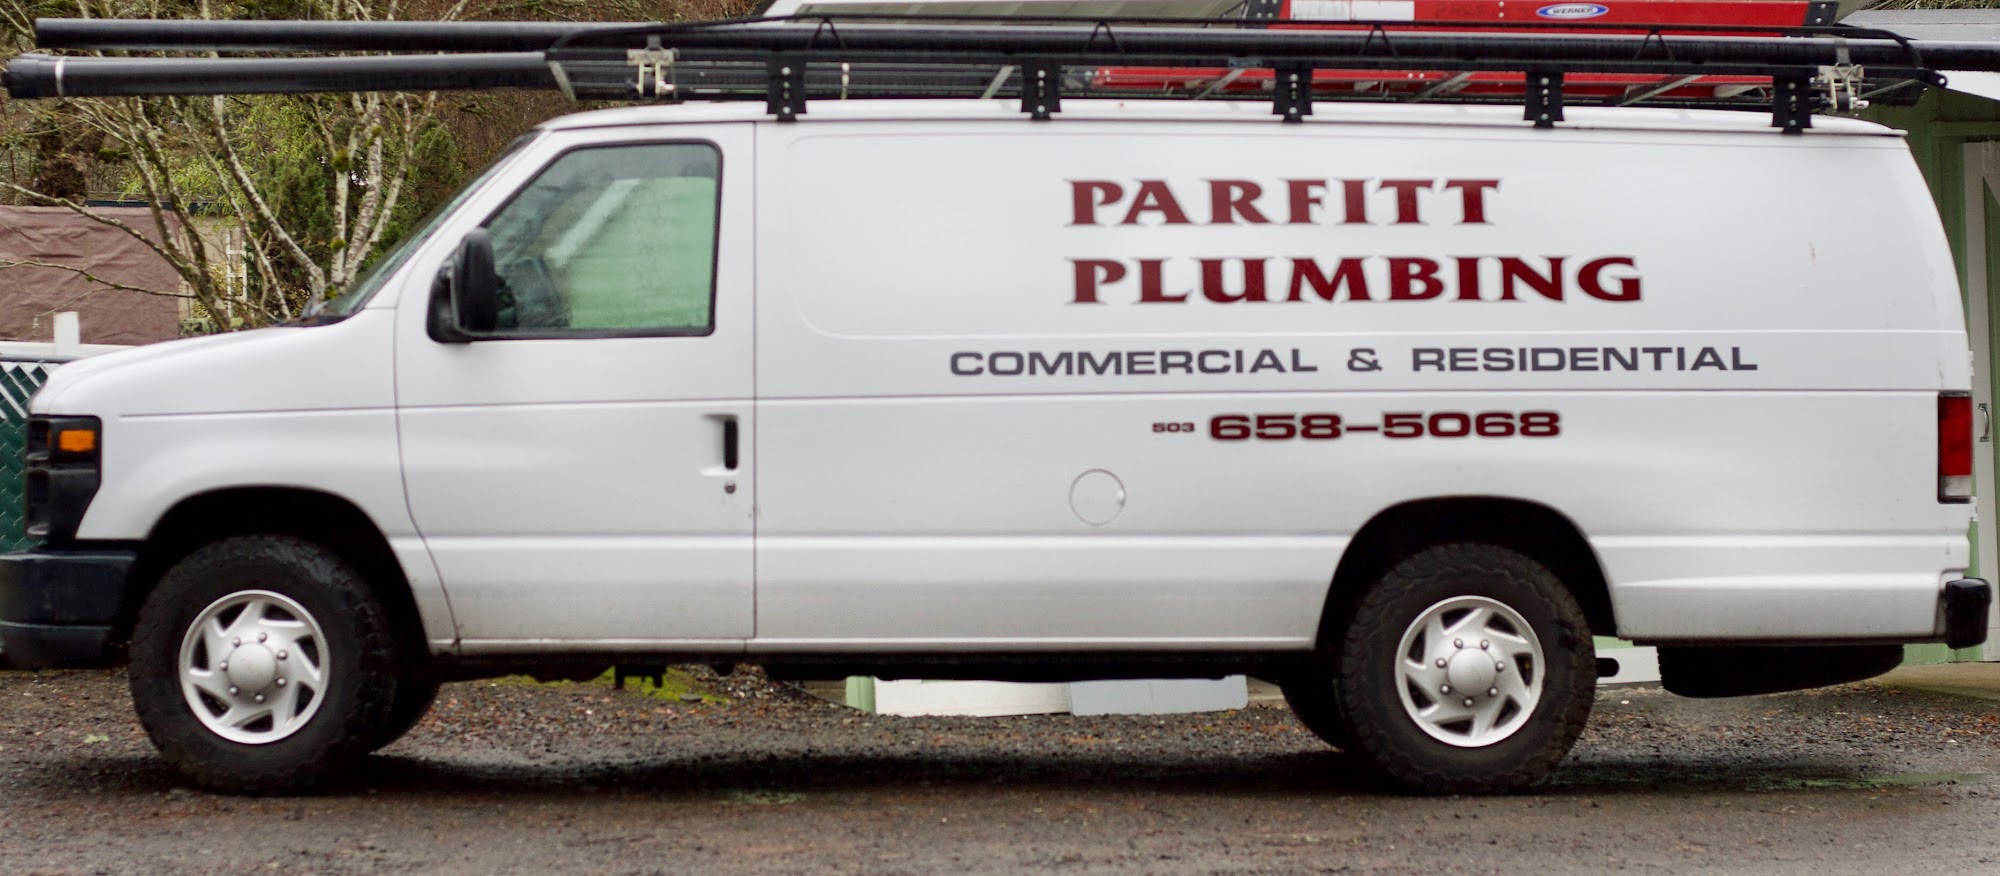 Parfitt Plumbing